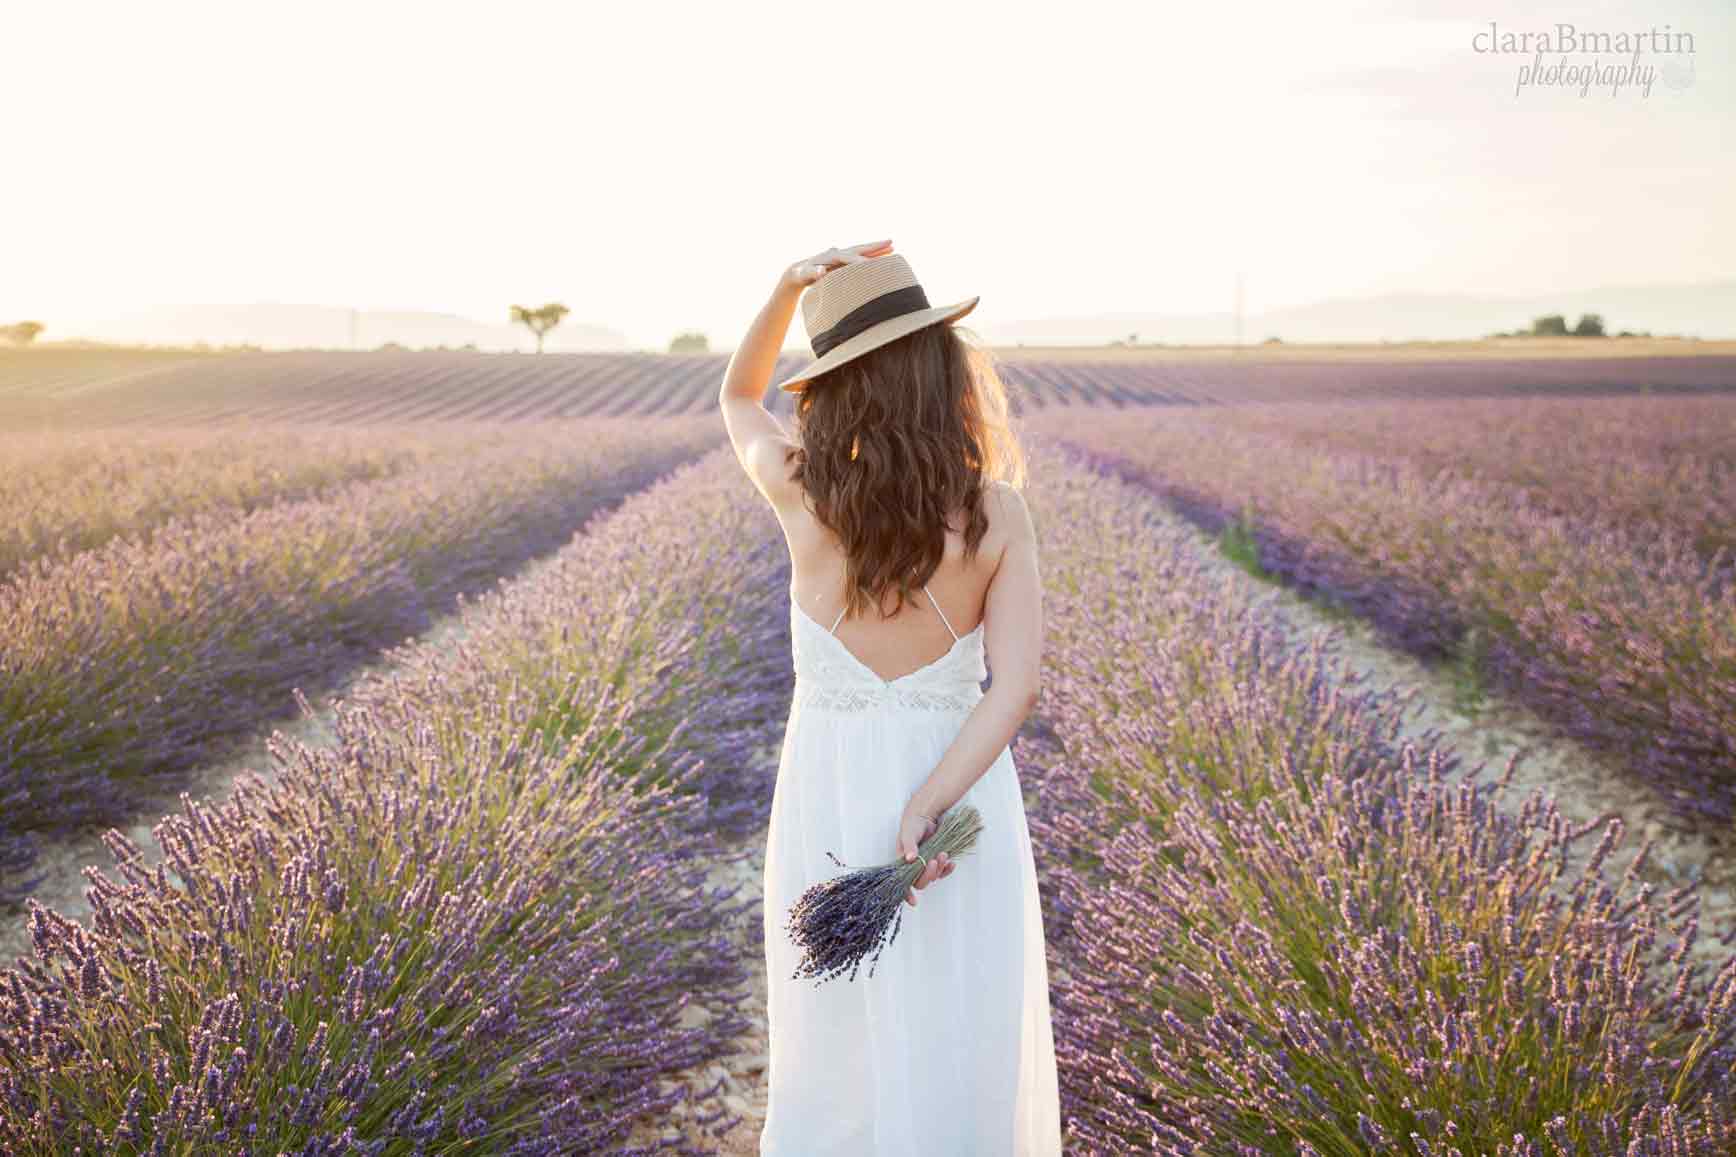 Lavender-fields-Provence-claraBmartin07